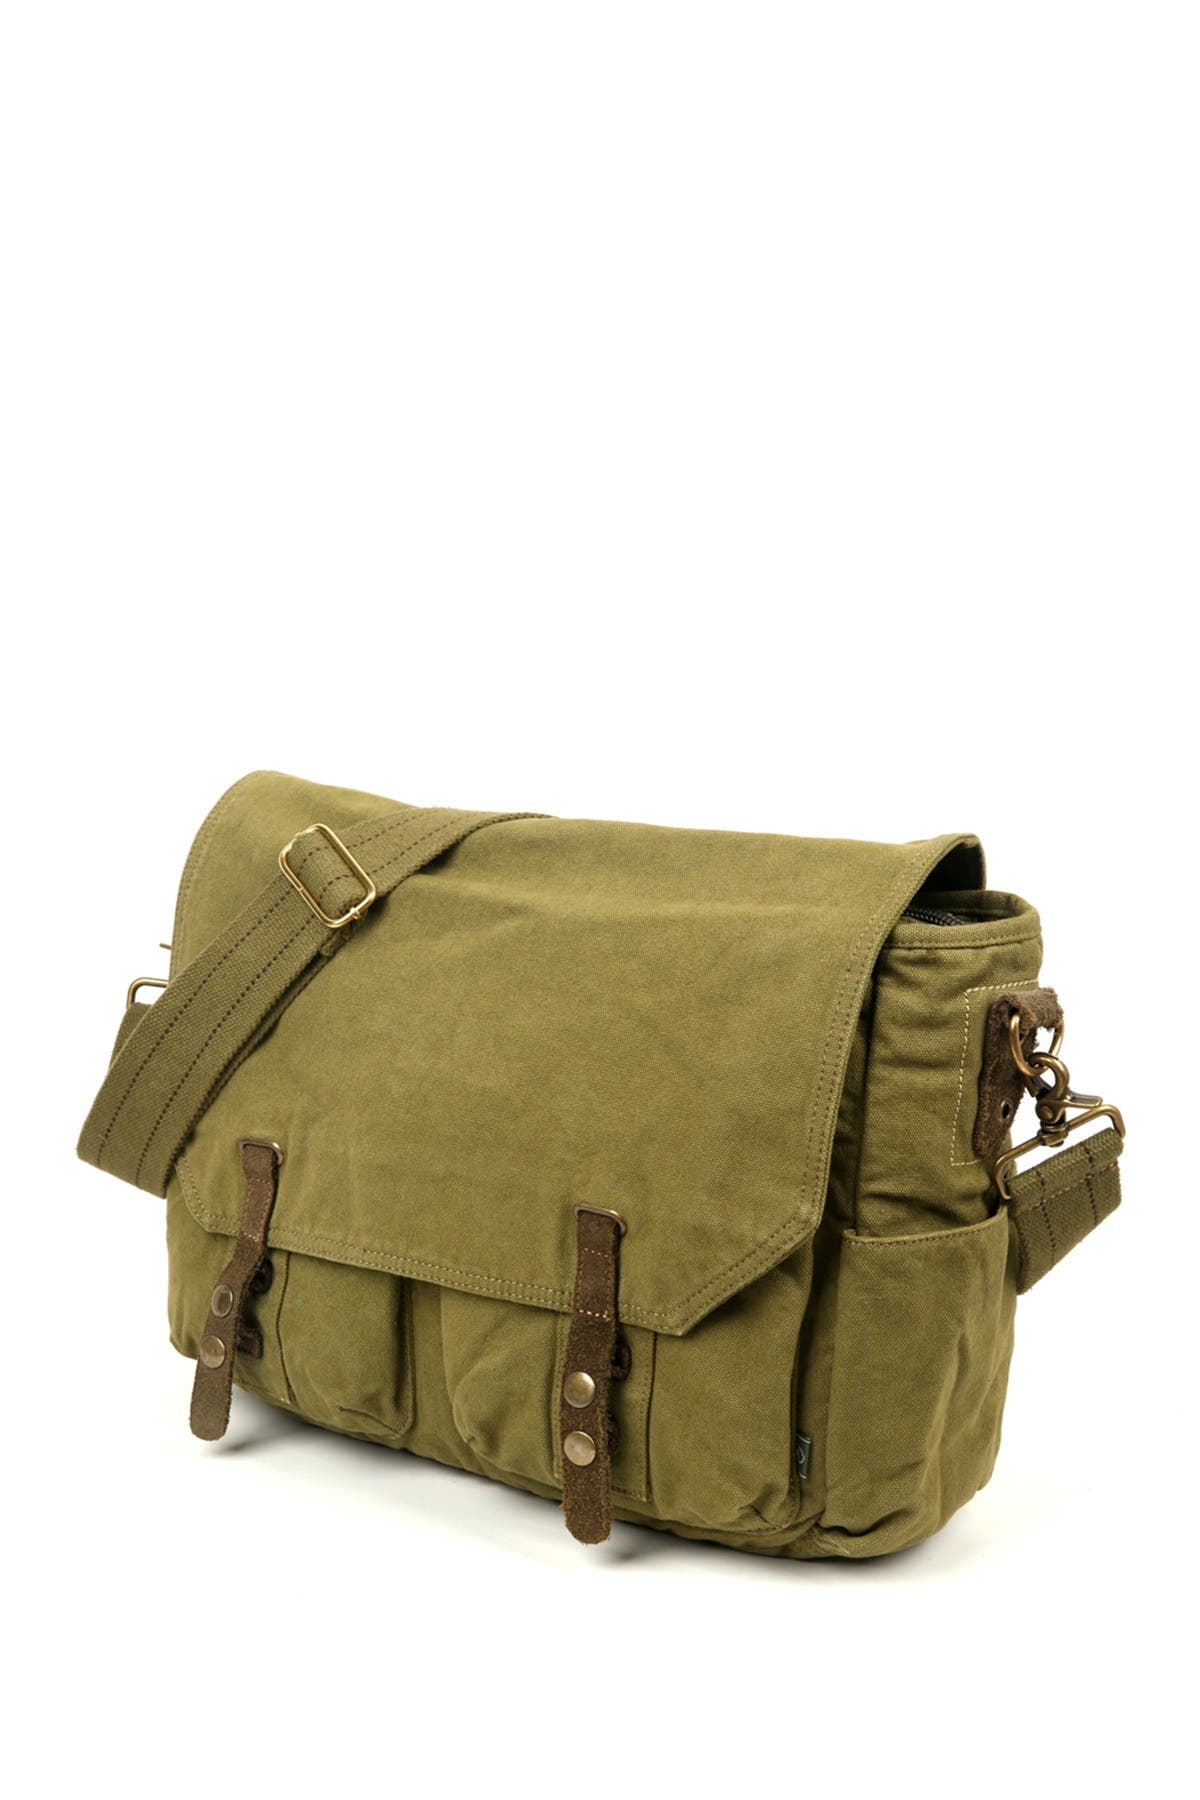 Tsd Coastal Canvas Messenger Bag In Light/pastel Green1